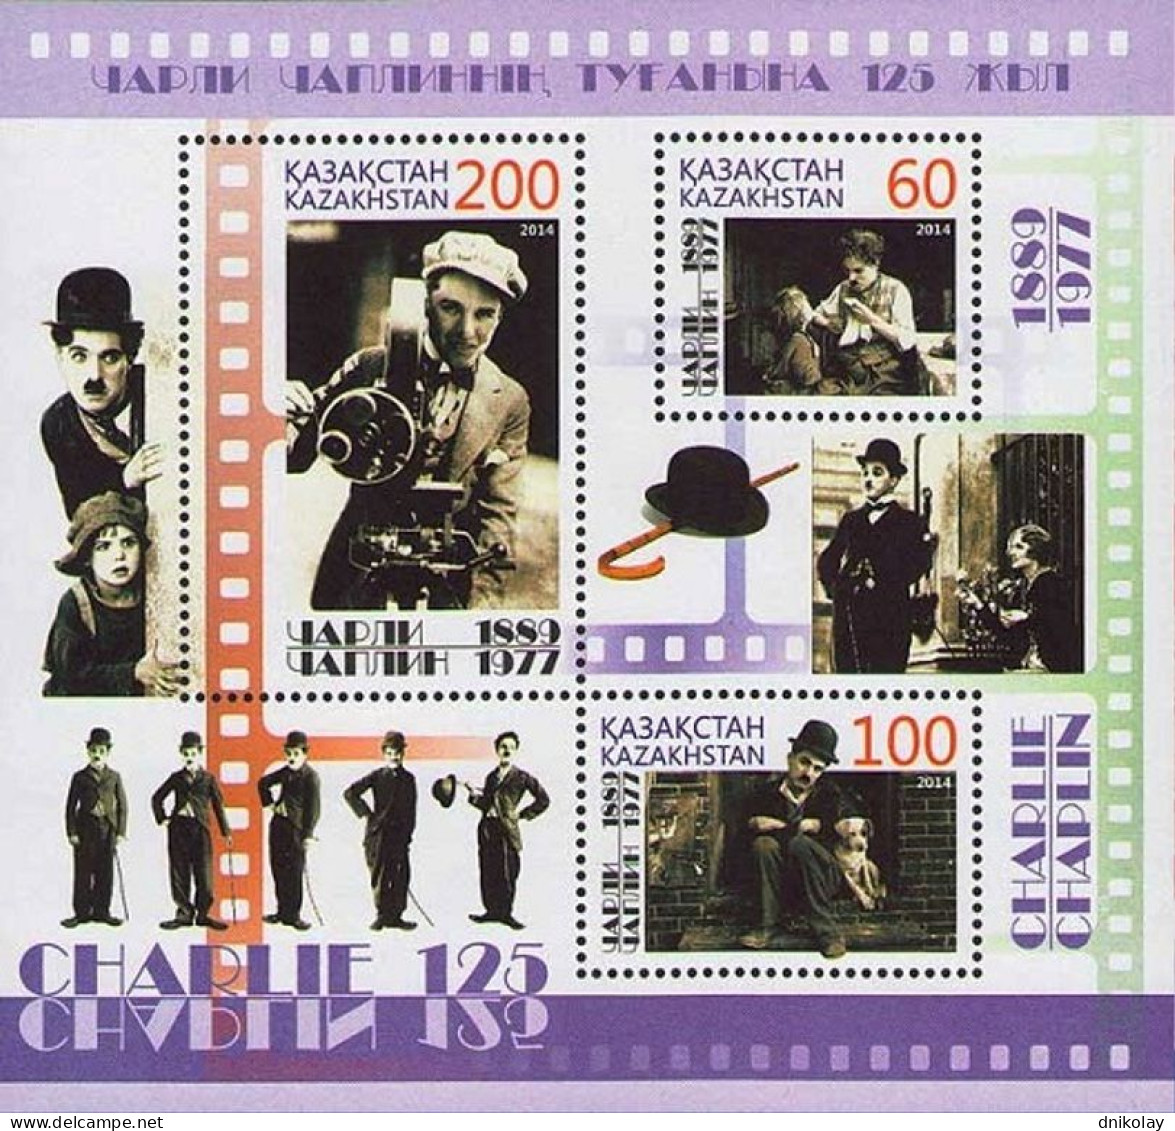 2015 887 Kazakhstan The 125th Anniversary (2014) Of The Birth Of Charlie Chaplin, 1889-1977 MNH - Kazachstan